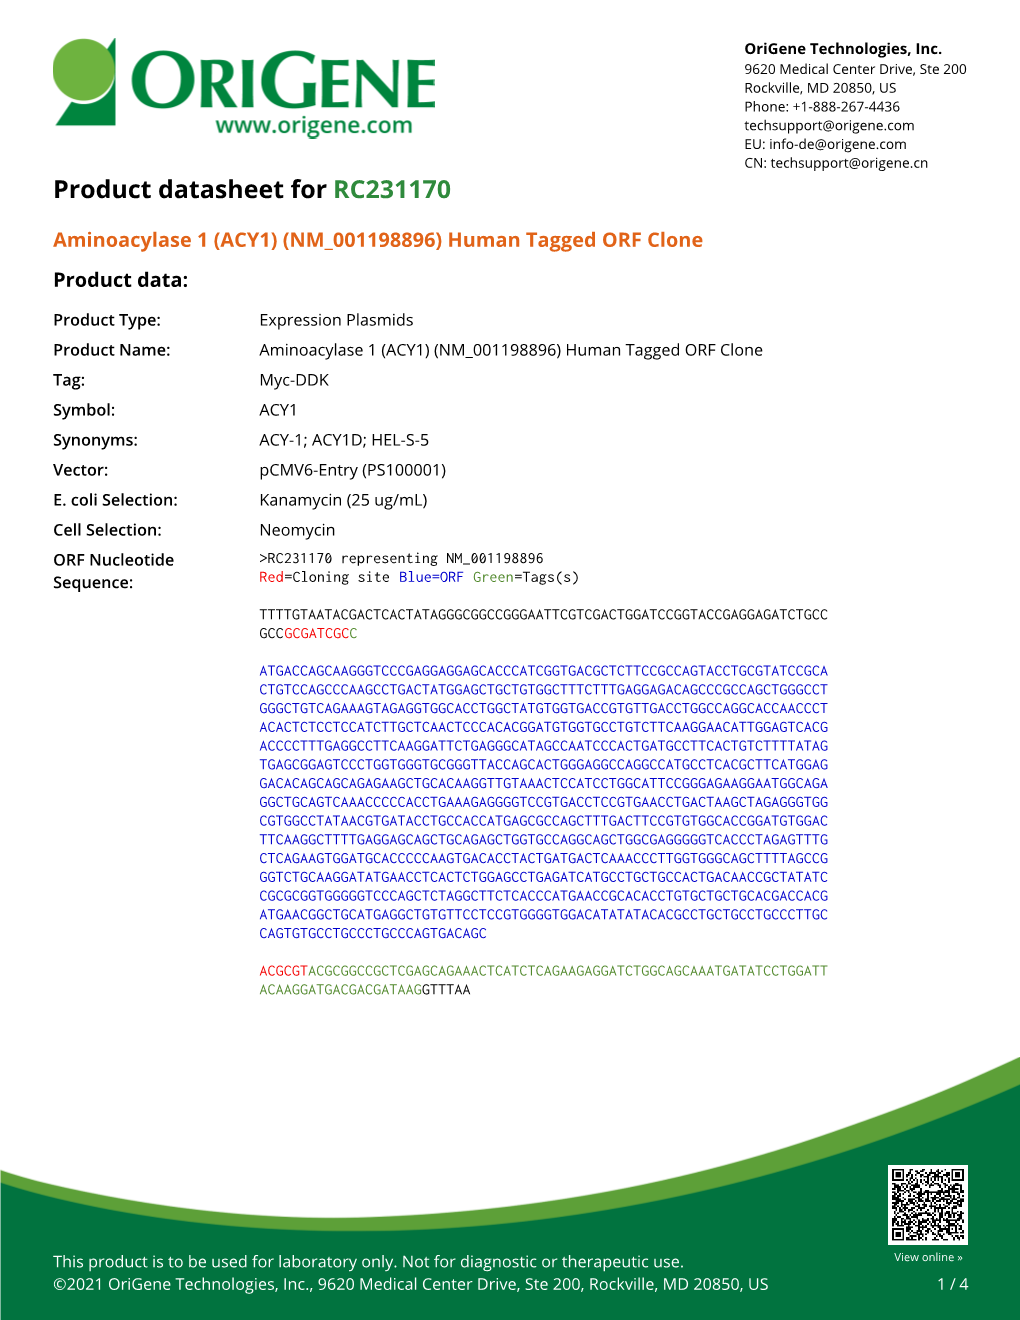 Aminoacylase 1 (ACY1) (NM 001198896) Human Tagged ORF Clone Product Data